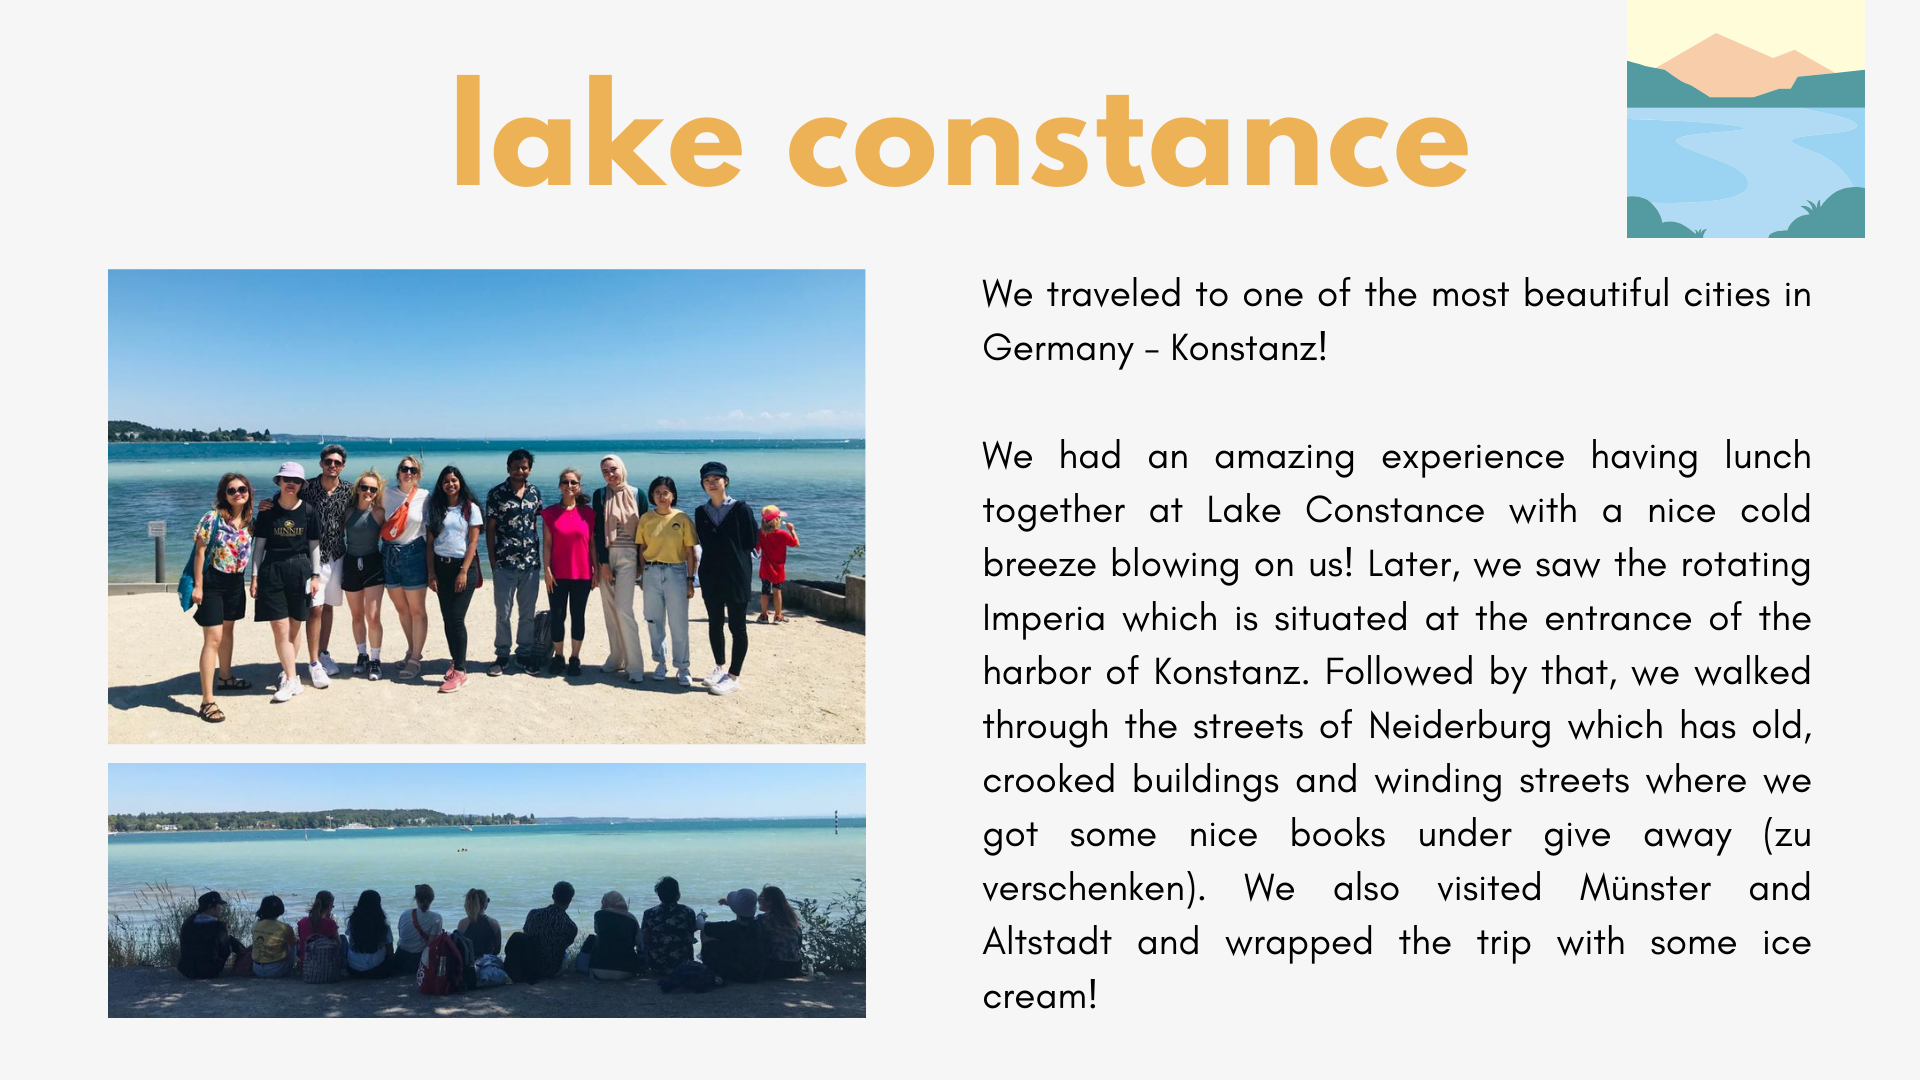 lake constance